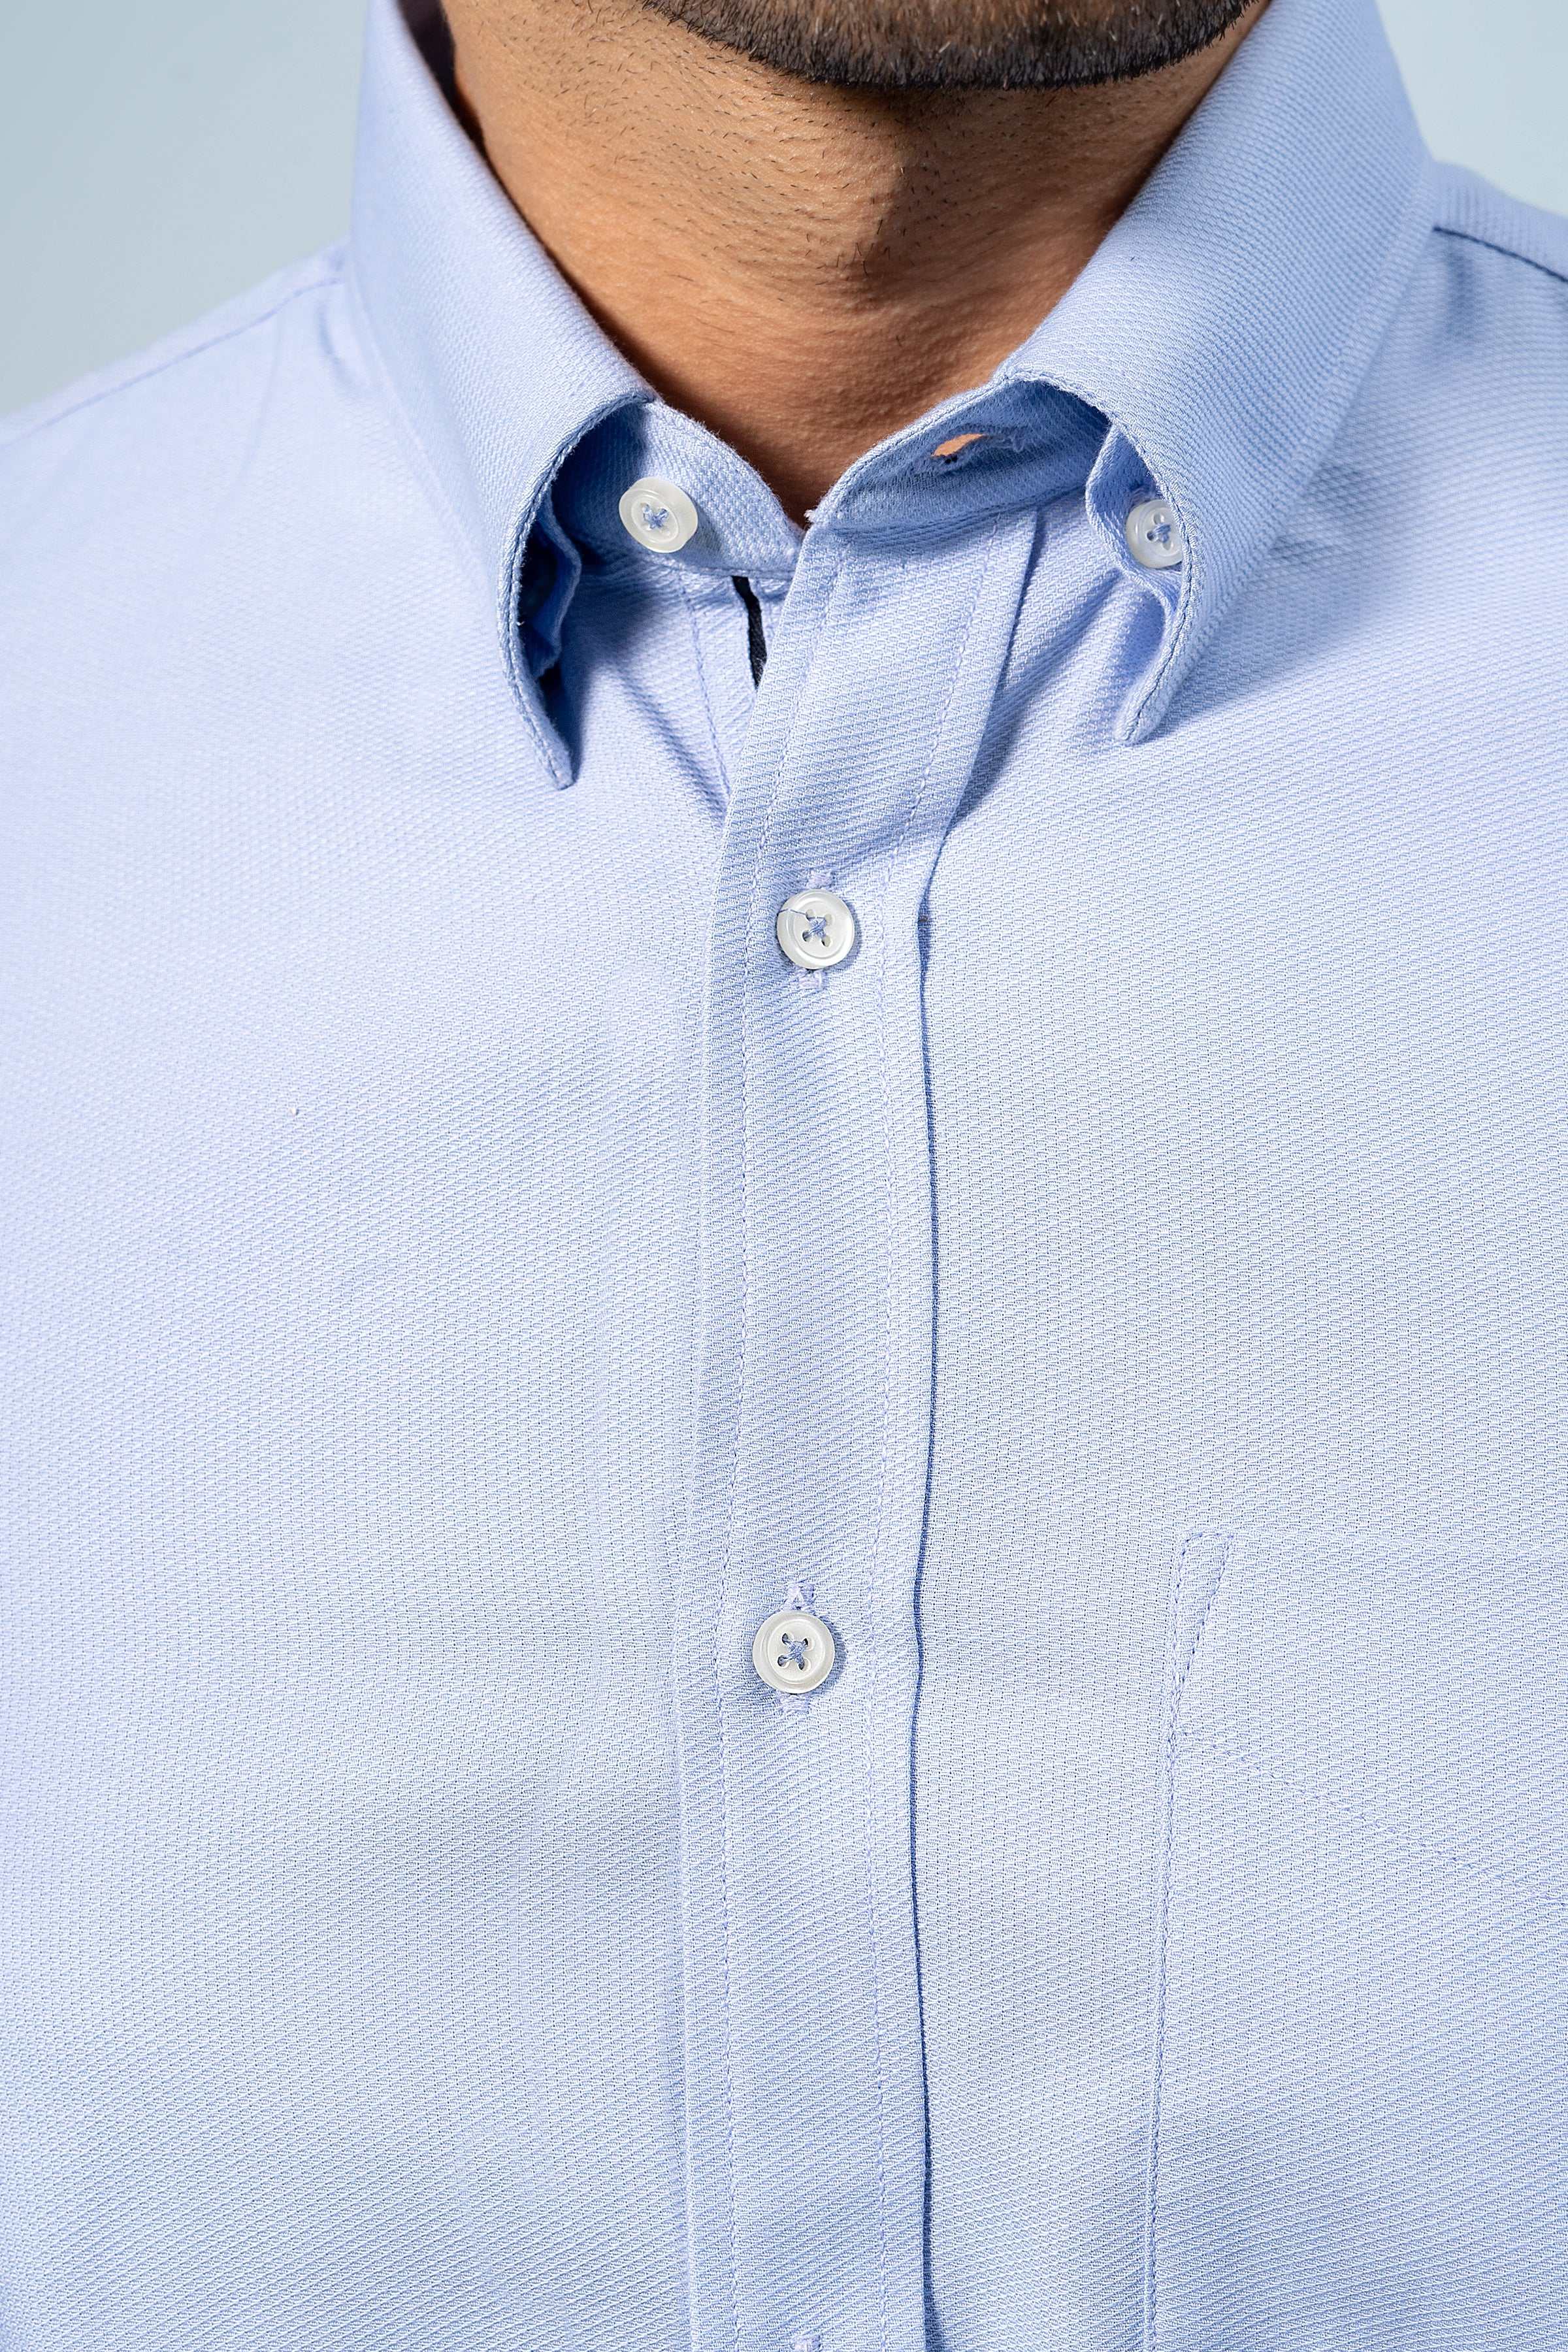 SMART SHIRT BLUE - Charcoal Clothing